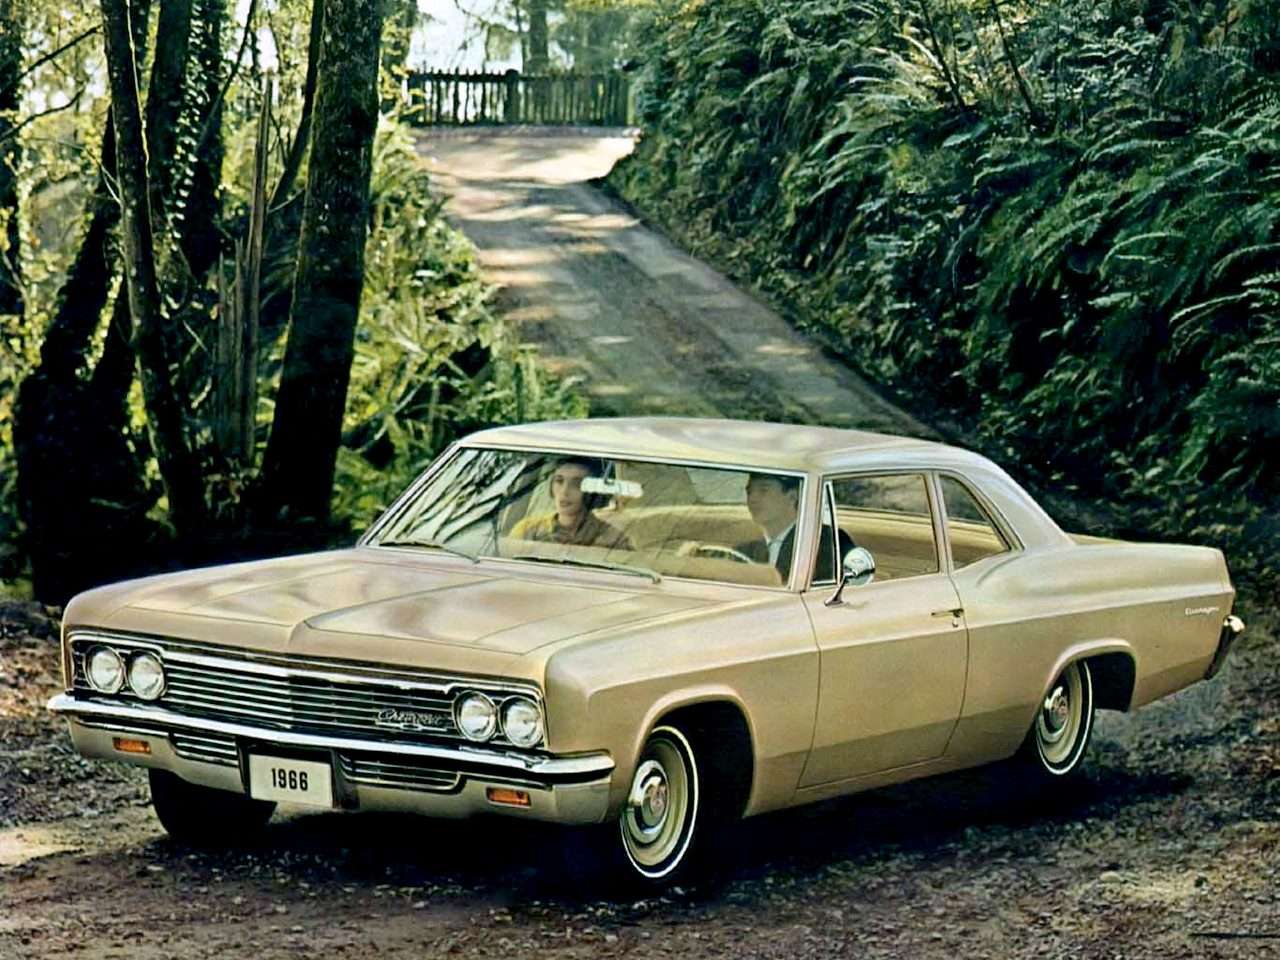 1966 Berlina di 2 porte di Chevrolet Biscayne puzzle online